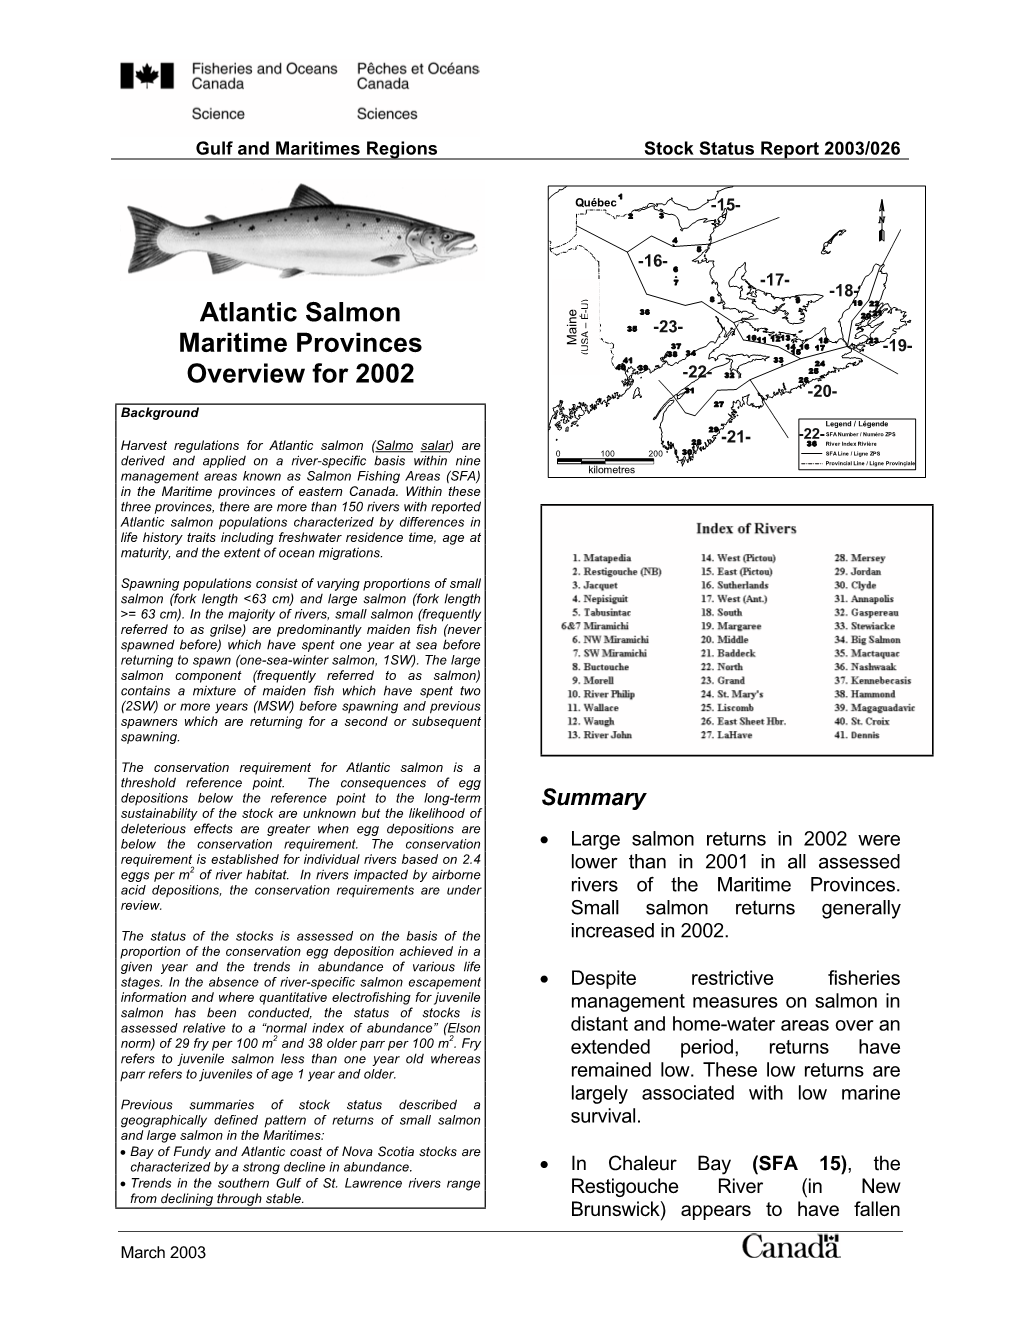 Atlantic Salmon Maritime Provinces Overview for 2002